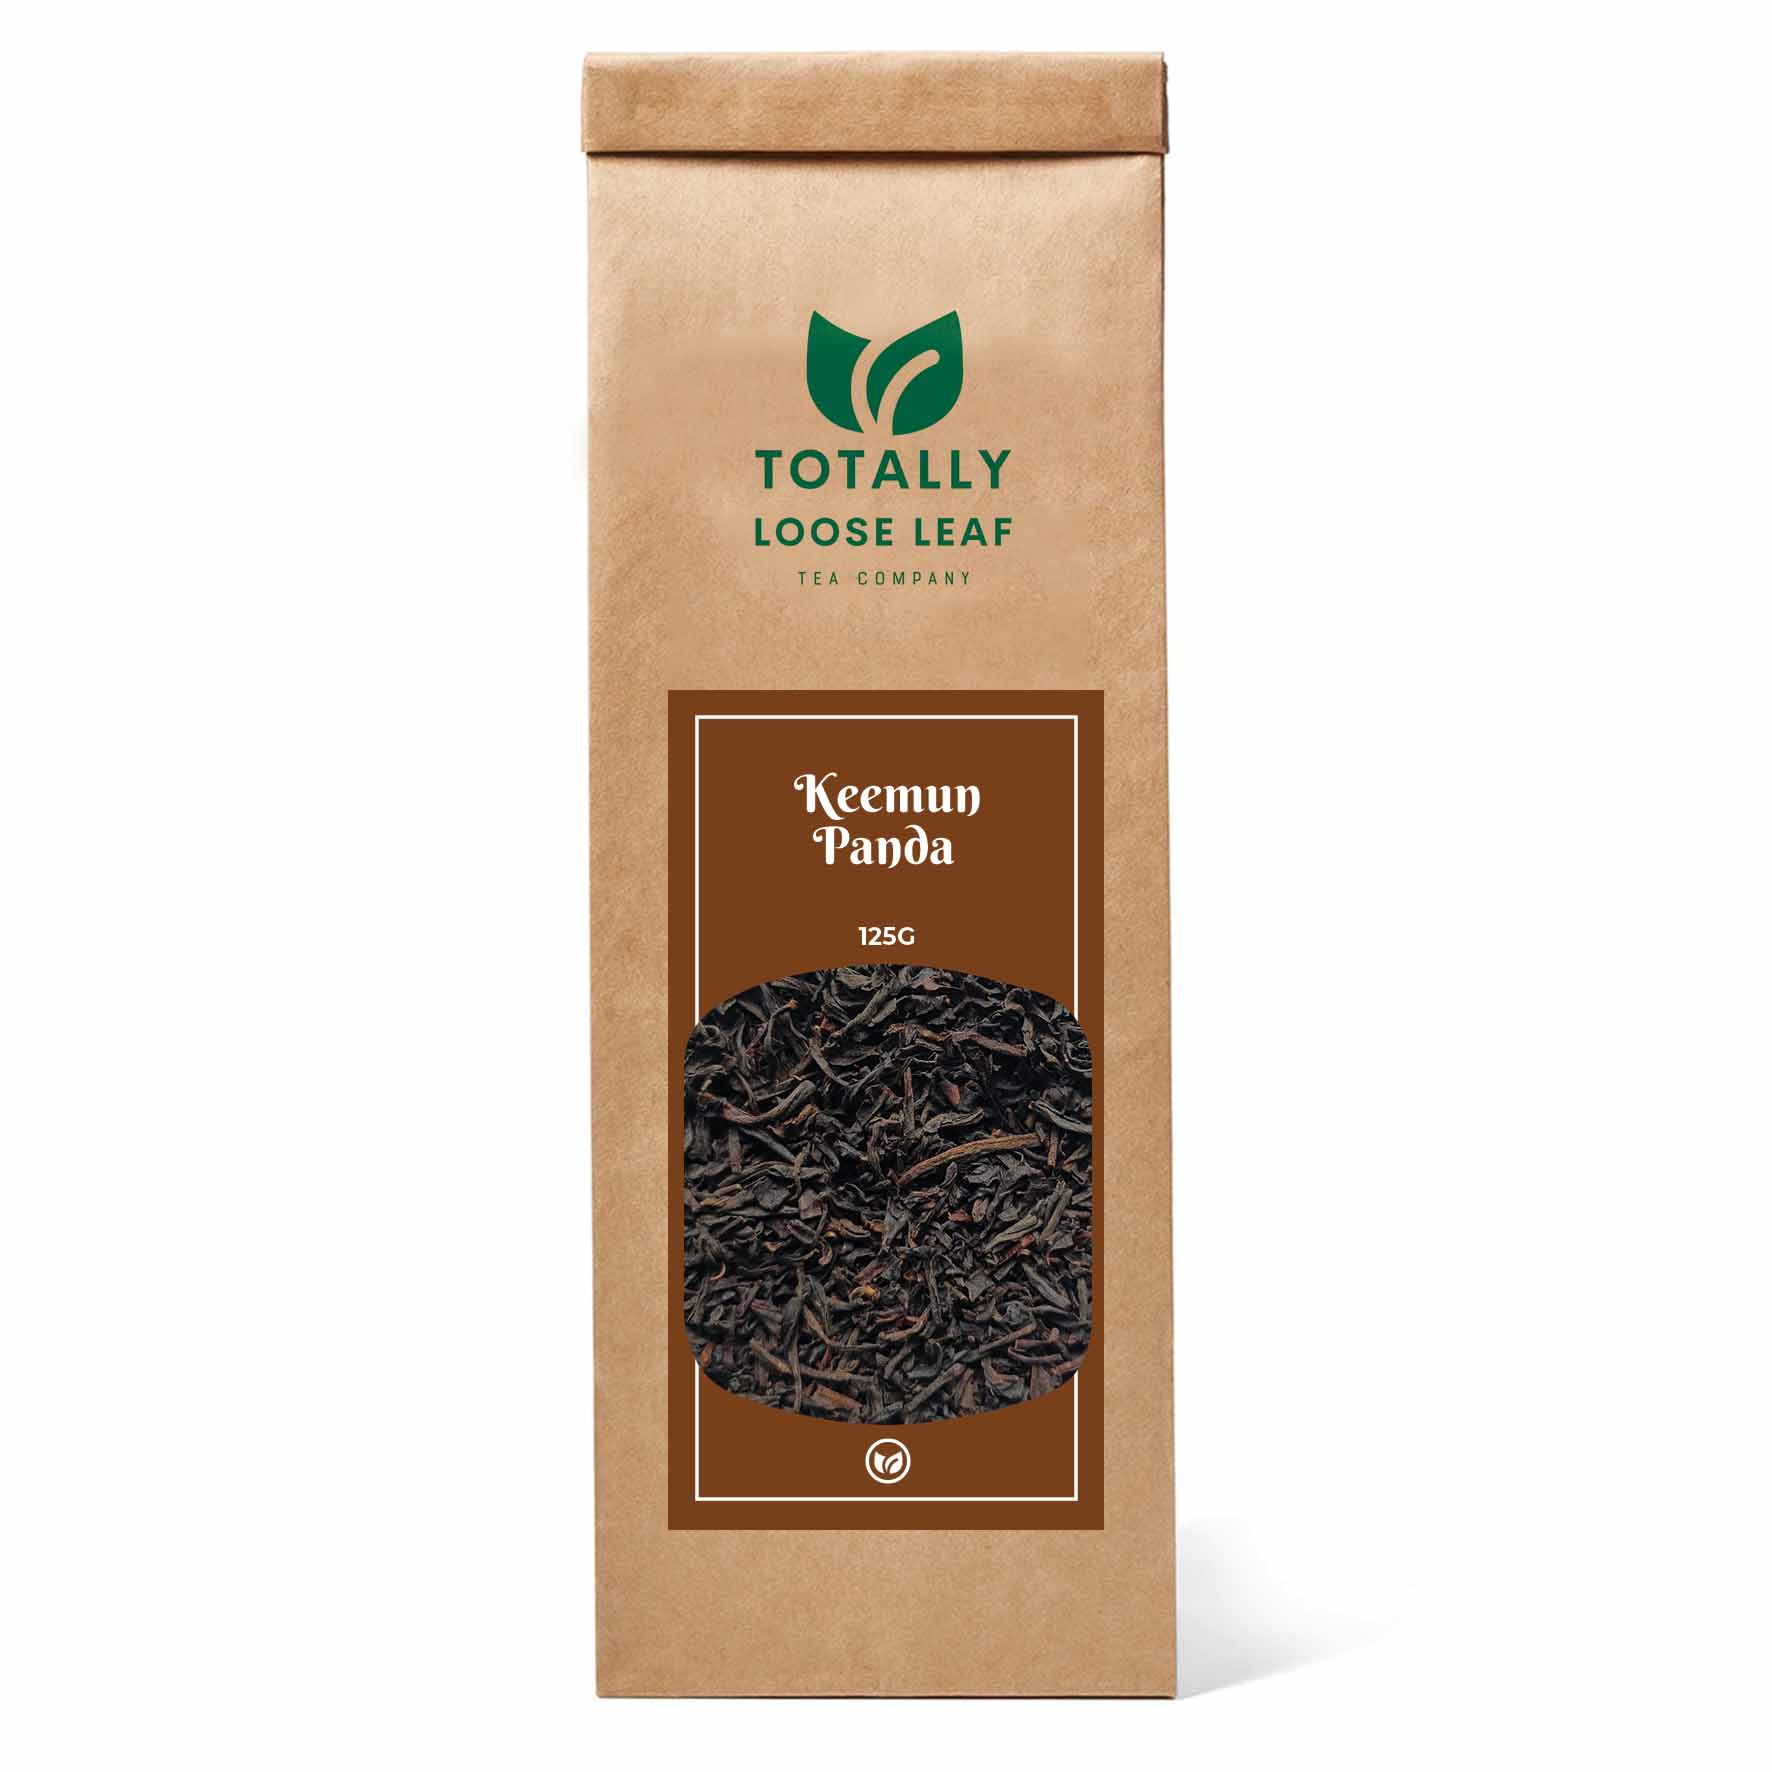 Keemun Panda Black Loose Leaf Tea - one pouch